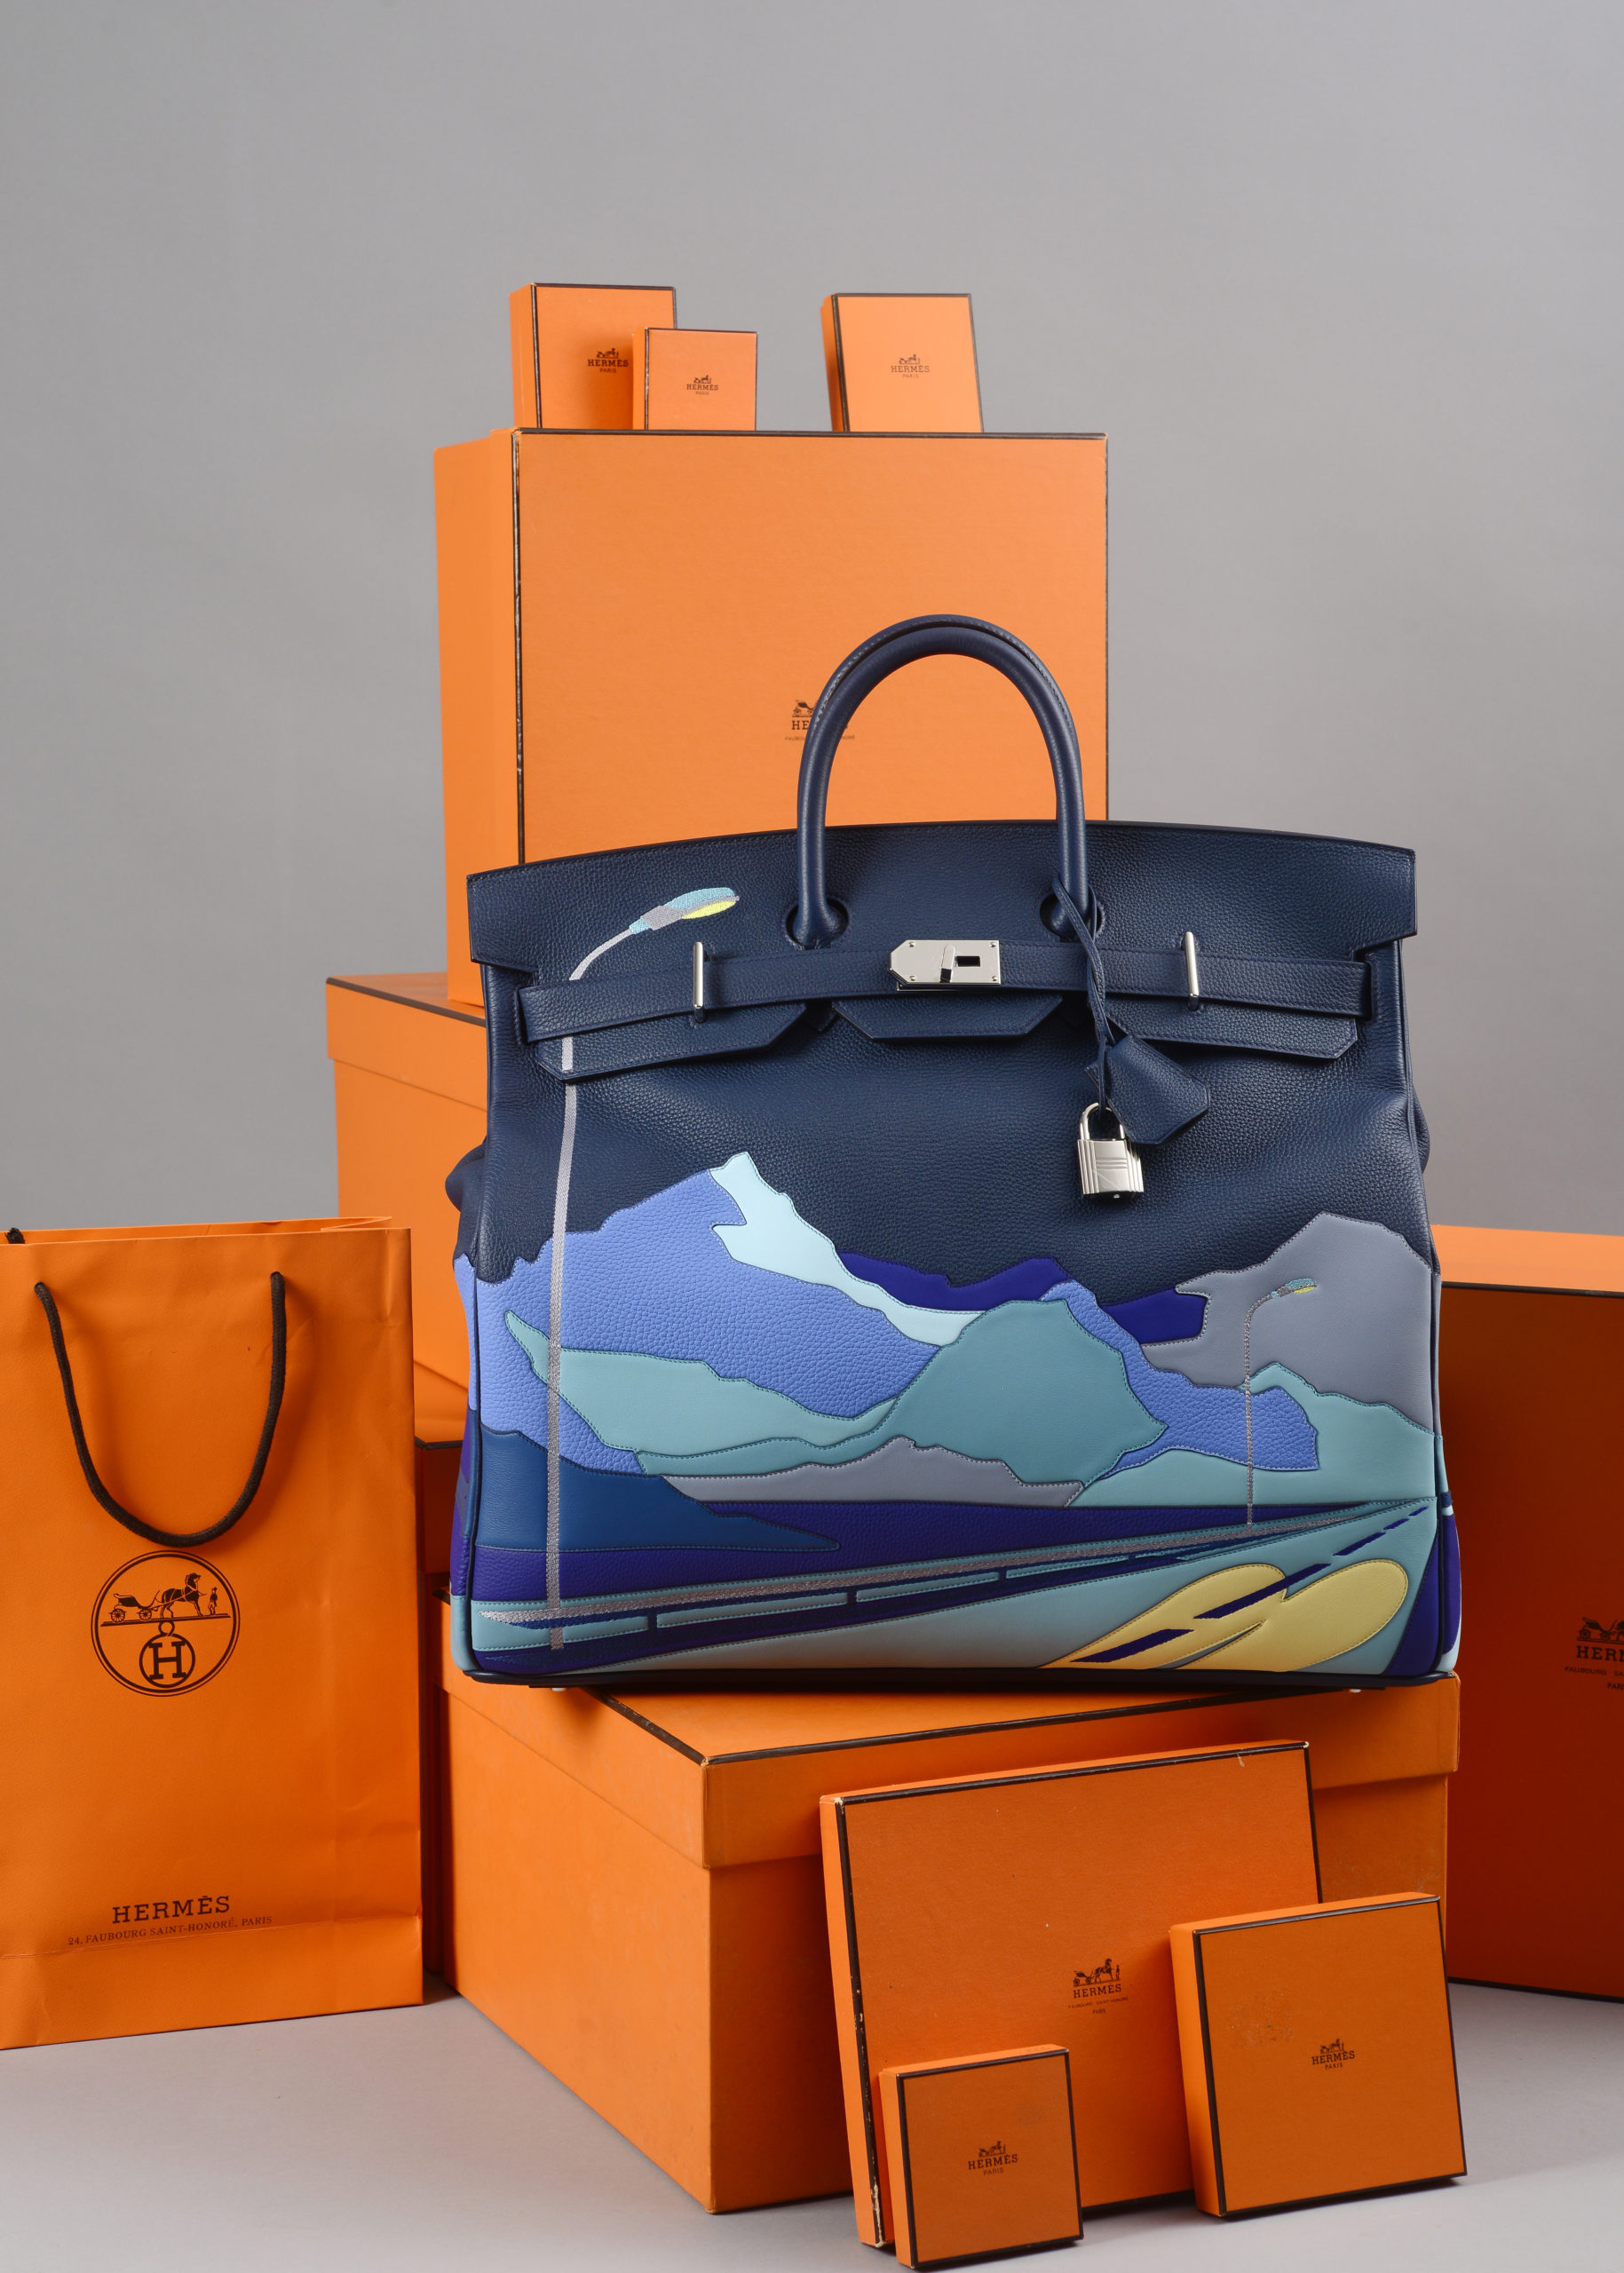 Rare Hermès Birkin bag set to fetch upwards of £30,000 at auction| Fellows Blog